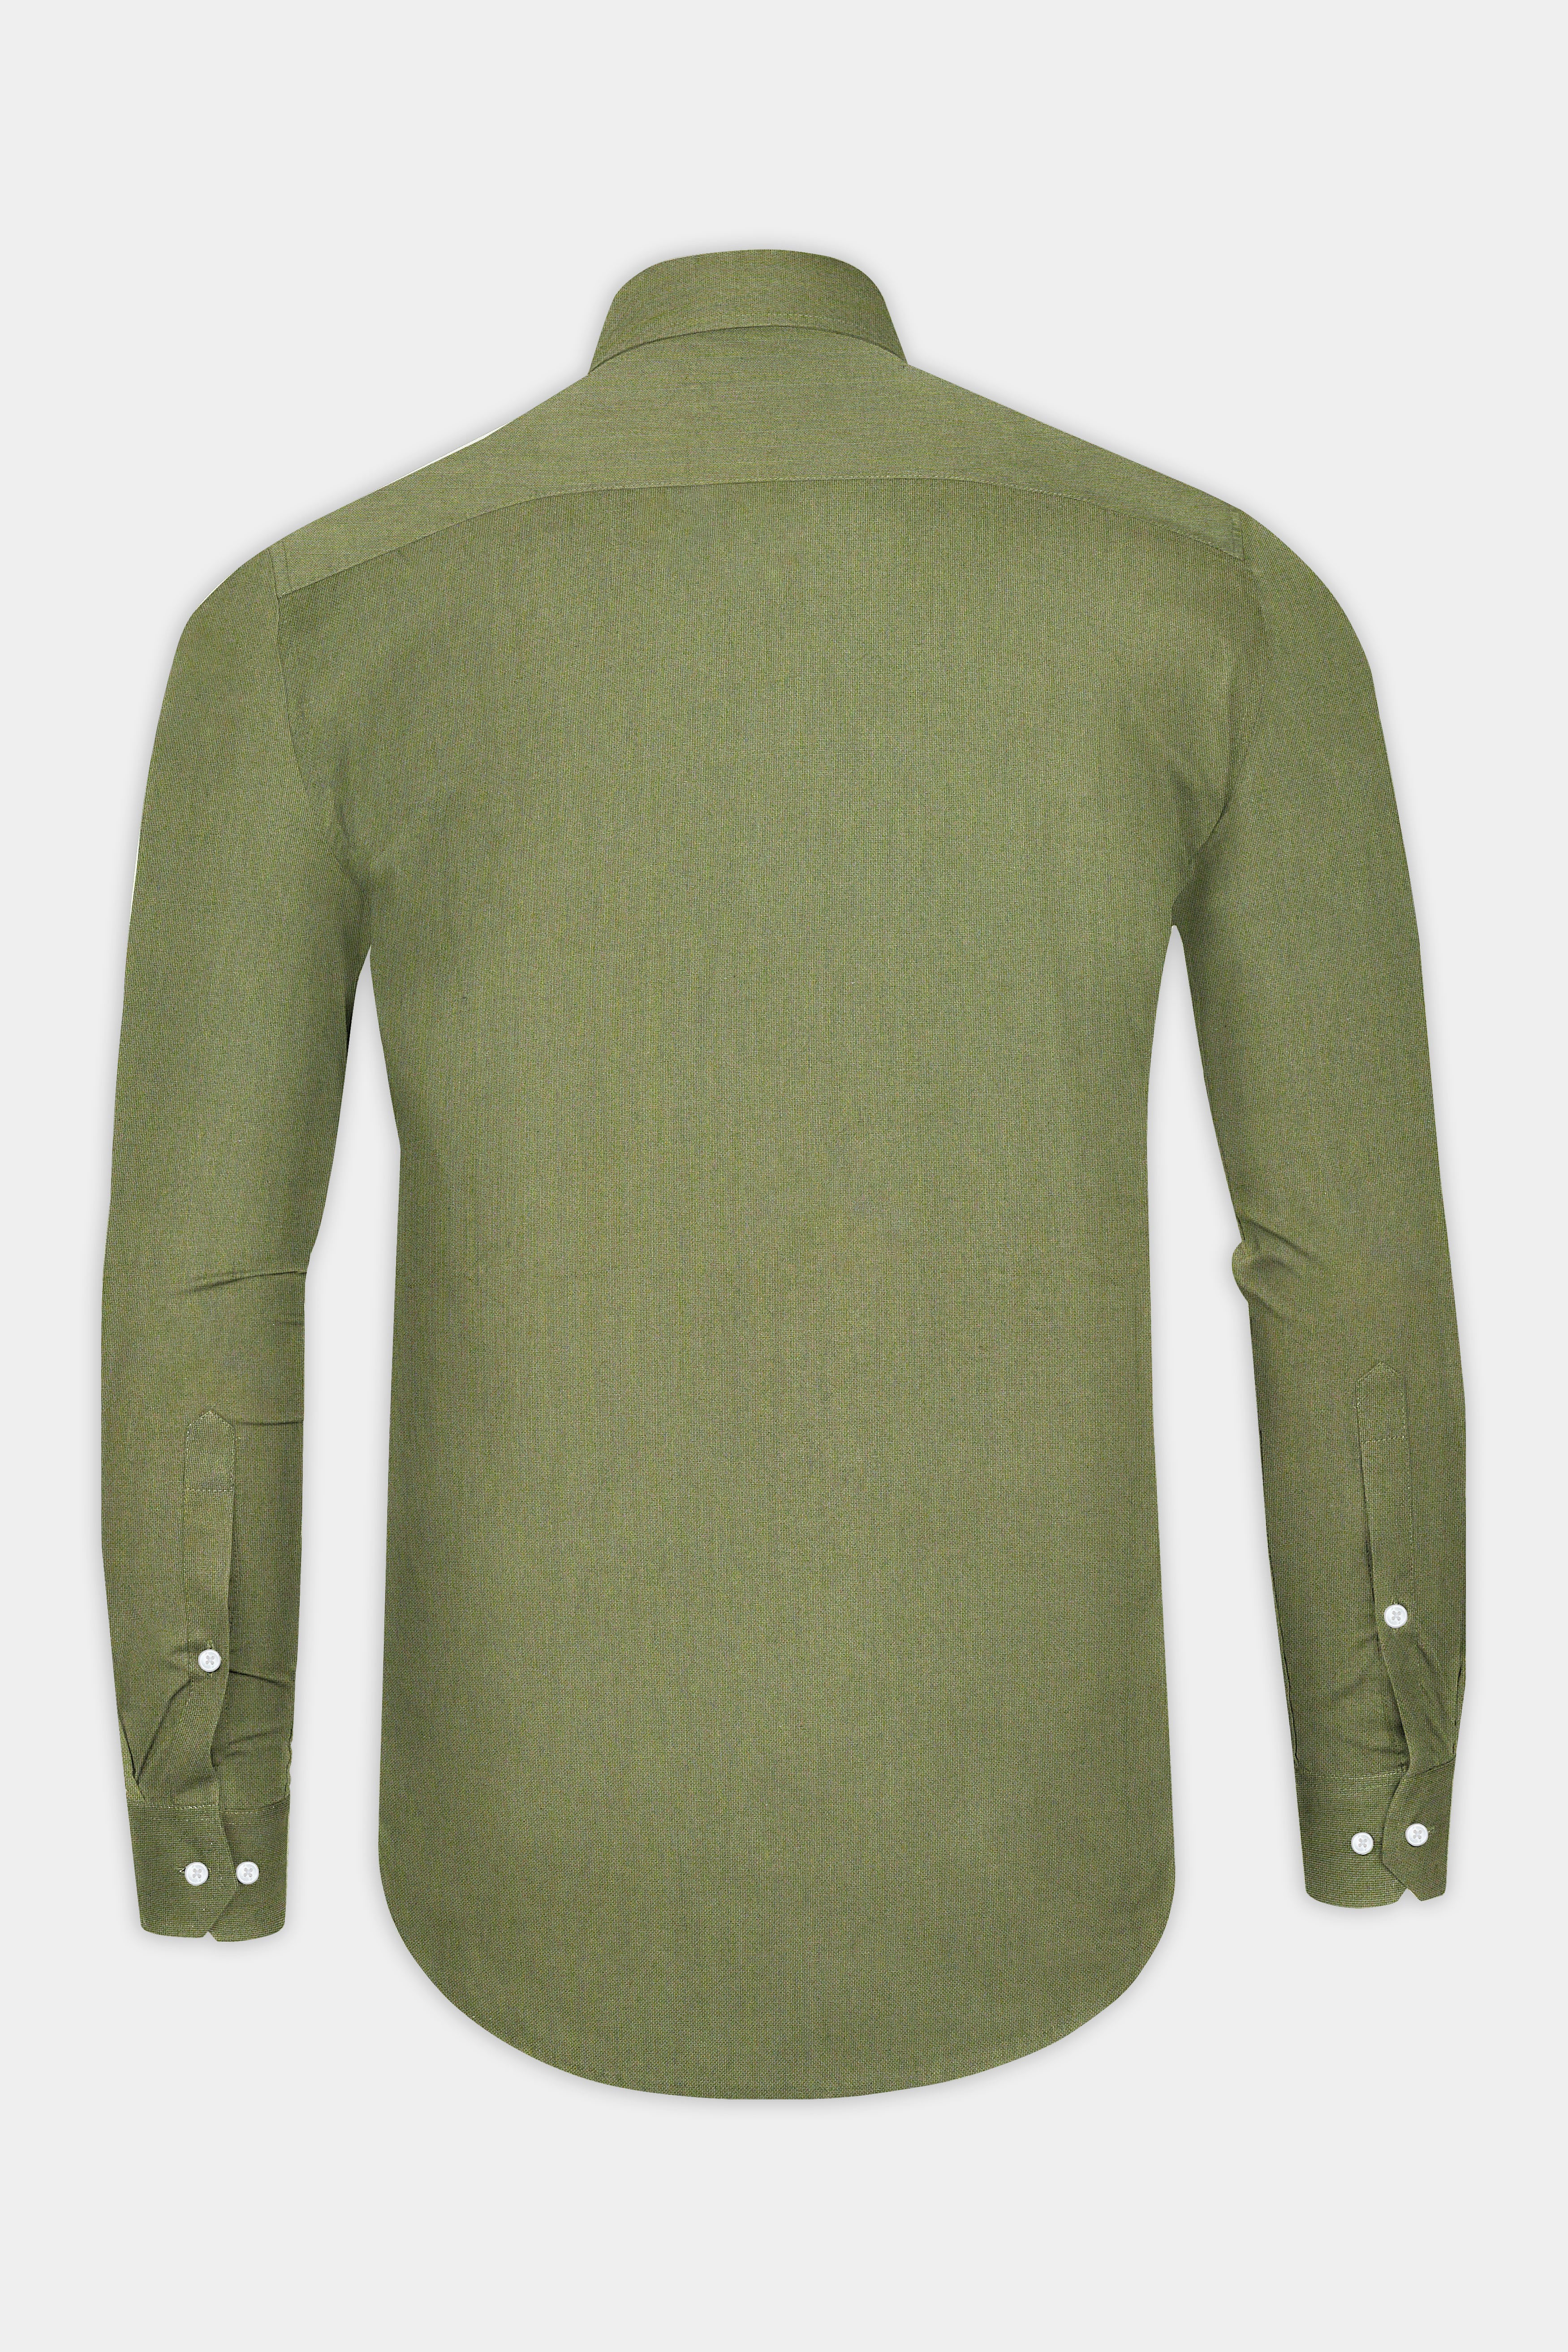 Verdigris Green Royal Oxford Shirt